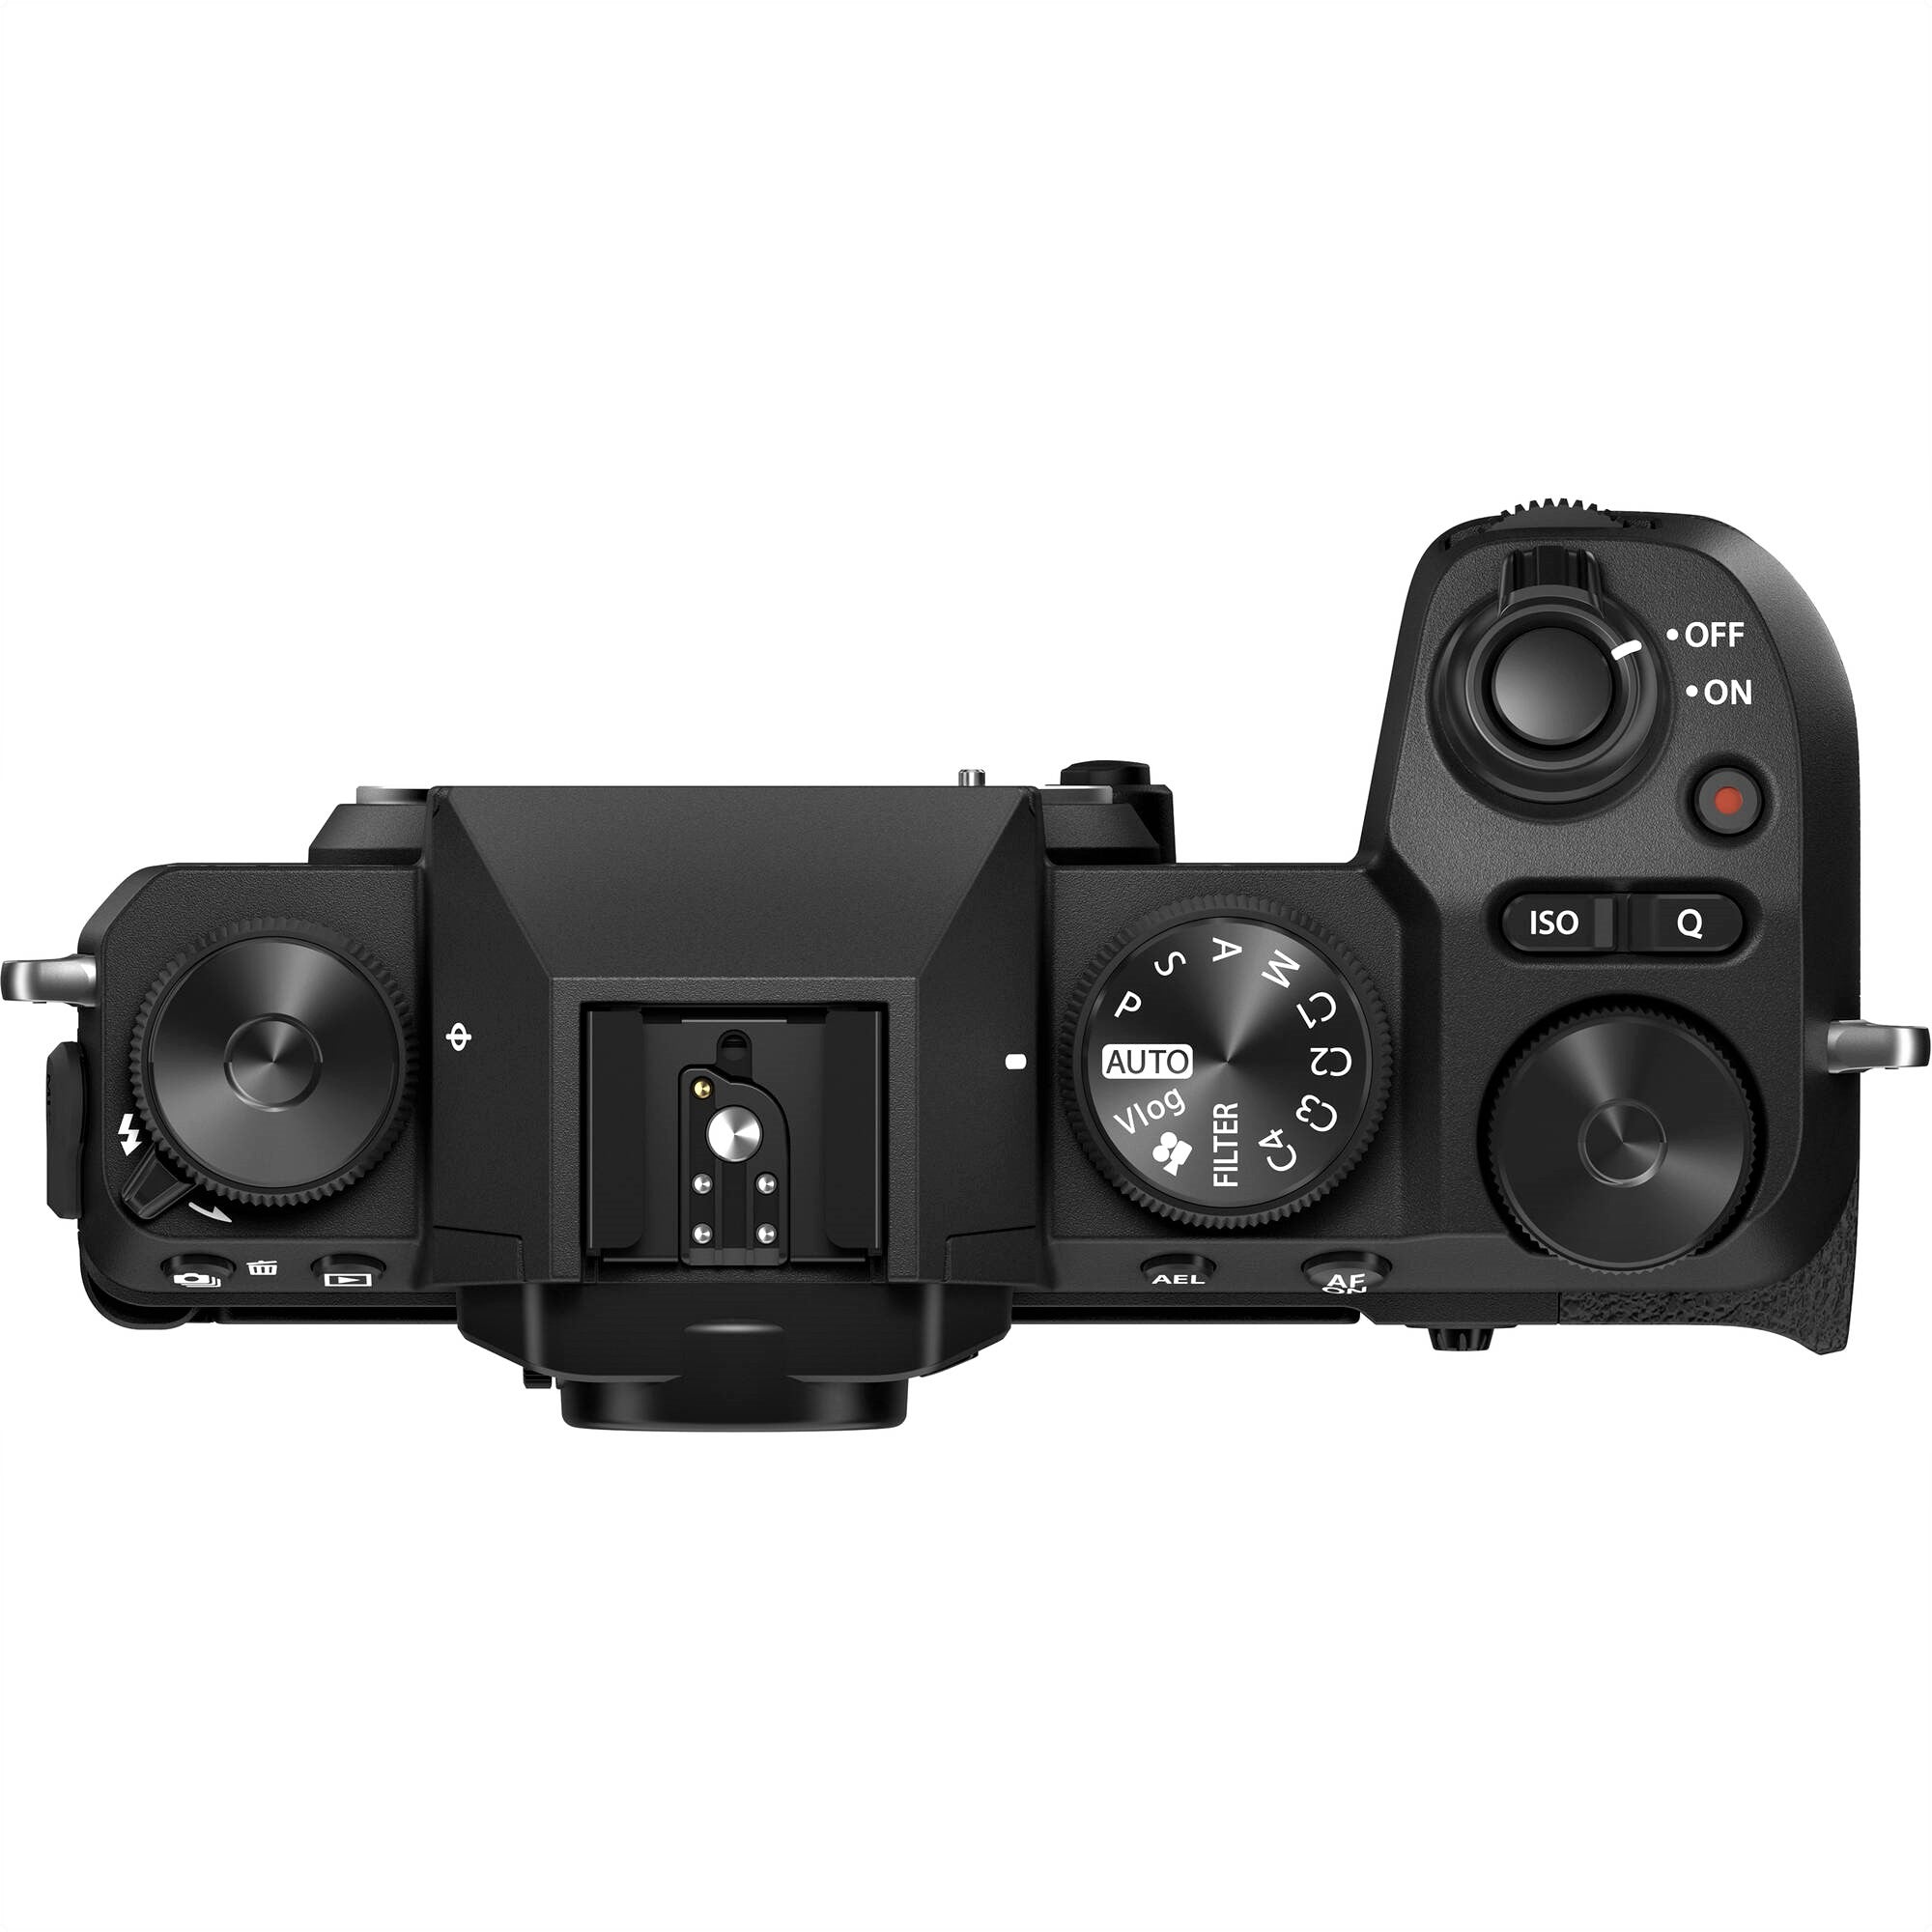 FUJIFILM X-S20 Mirrorless Camera (Black) - Top View